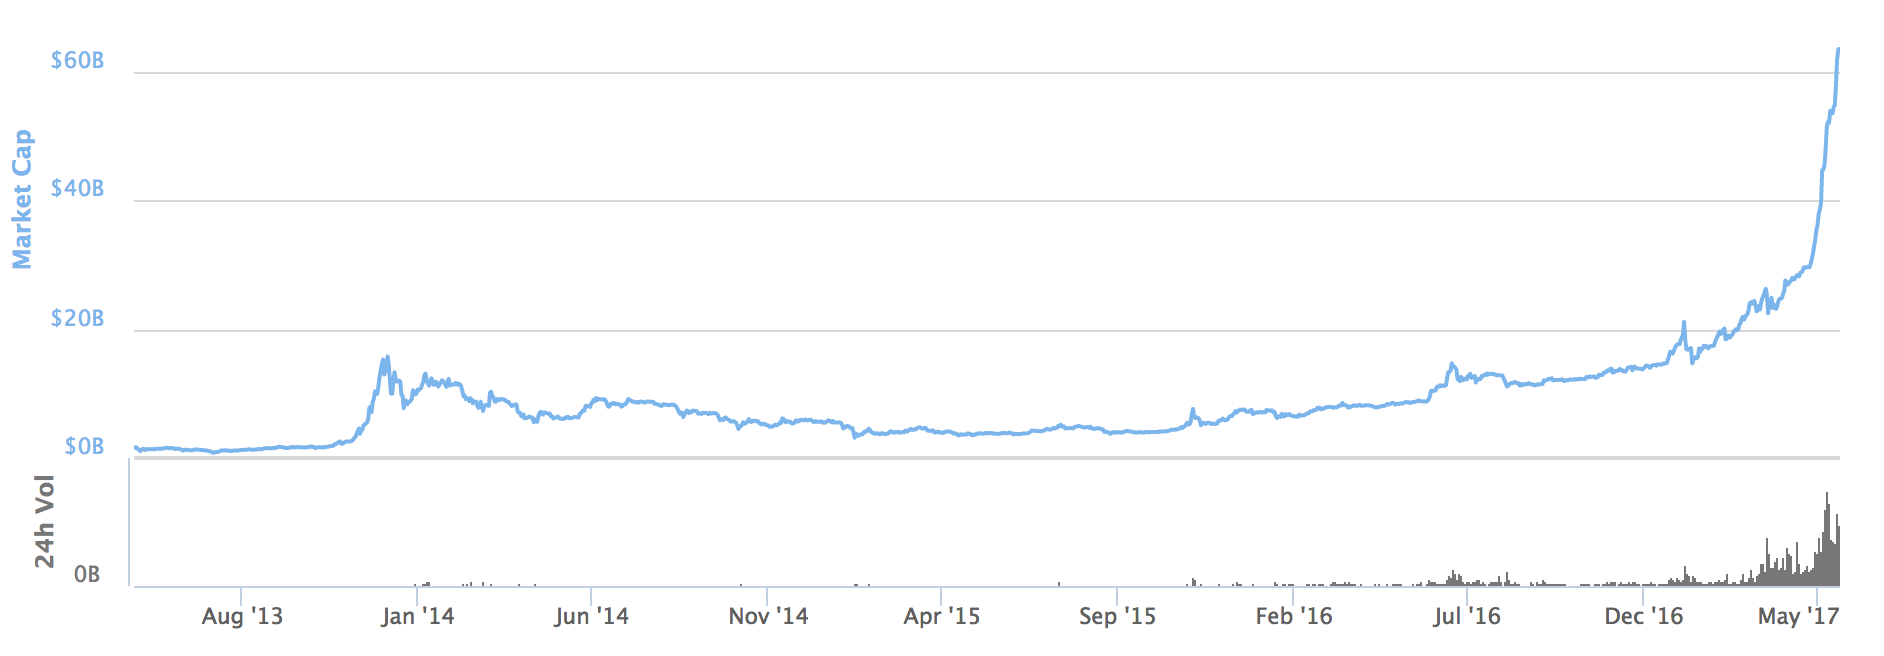 Crypto market all time high bitcoin plus 500